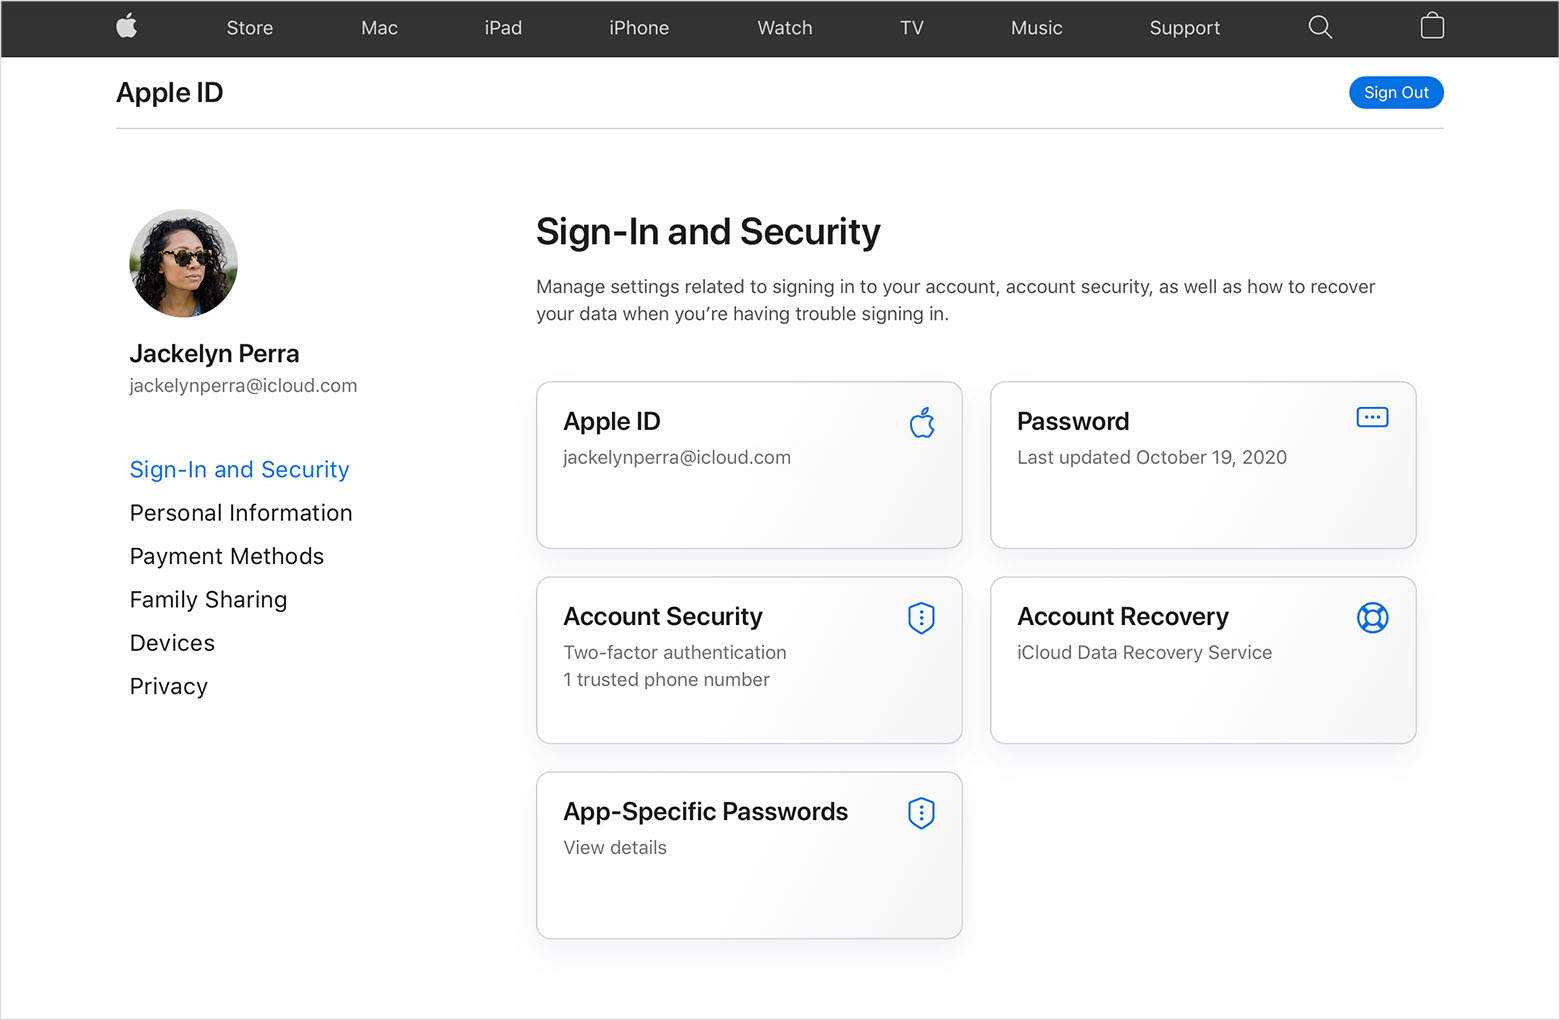 Change your Apple ID password on the web at appleid.apple.com